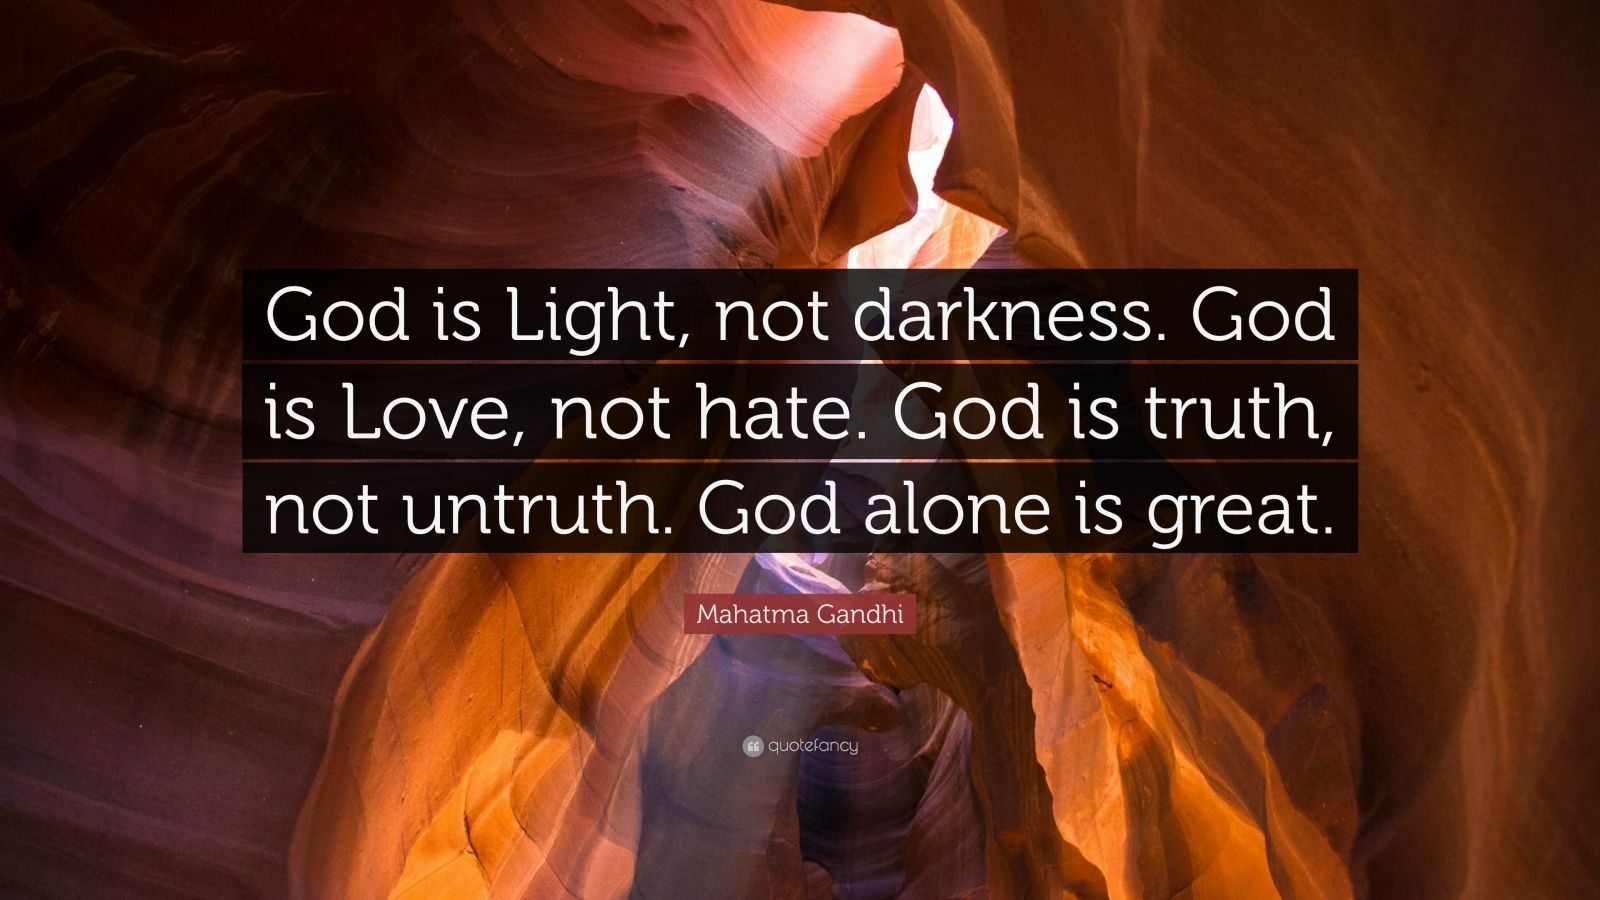 Mahatma Gandhi Quote: “God is Light, not darkness. God is Love, not ...